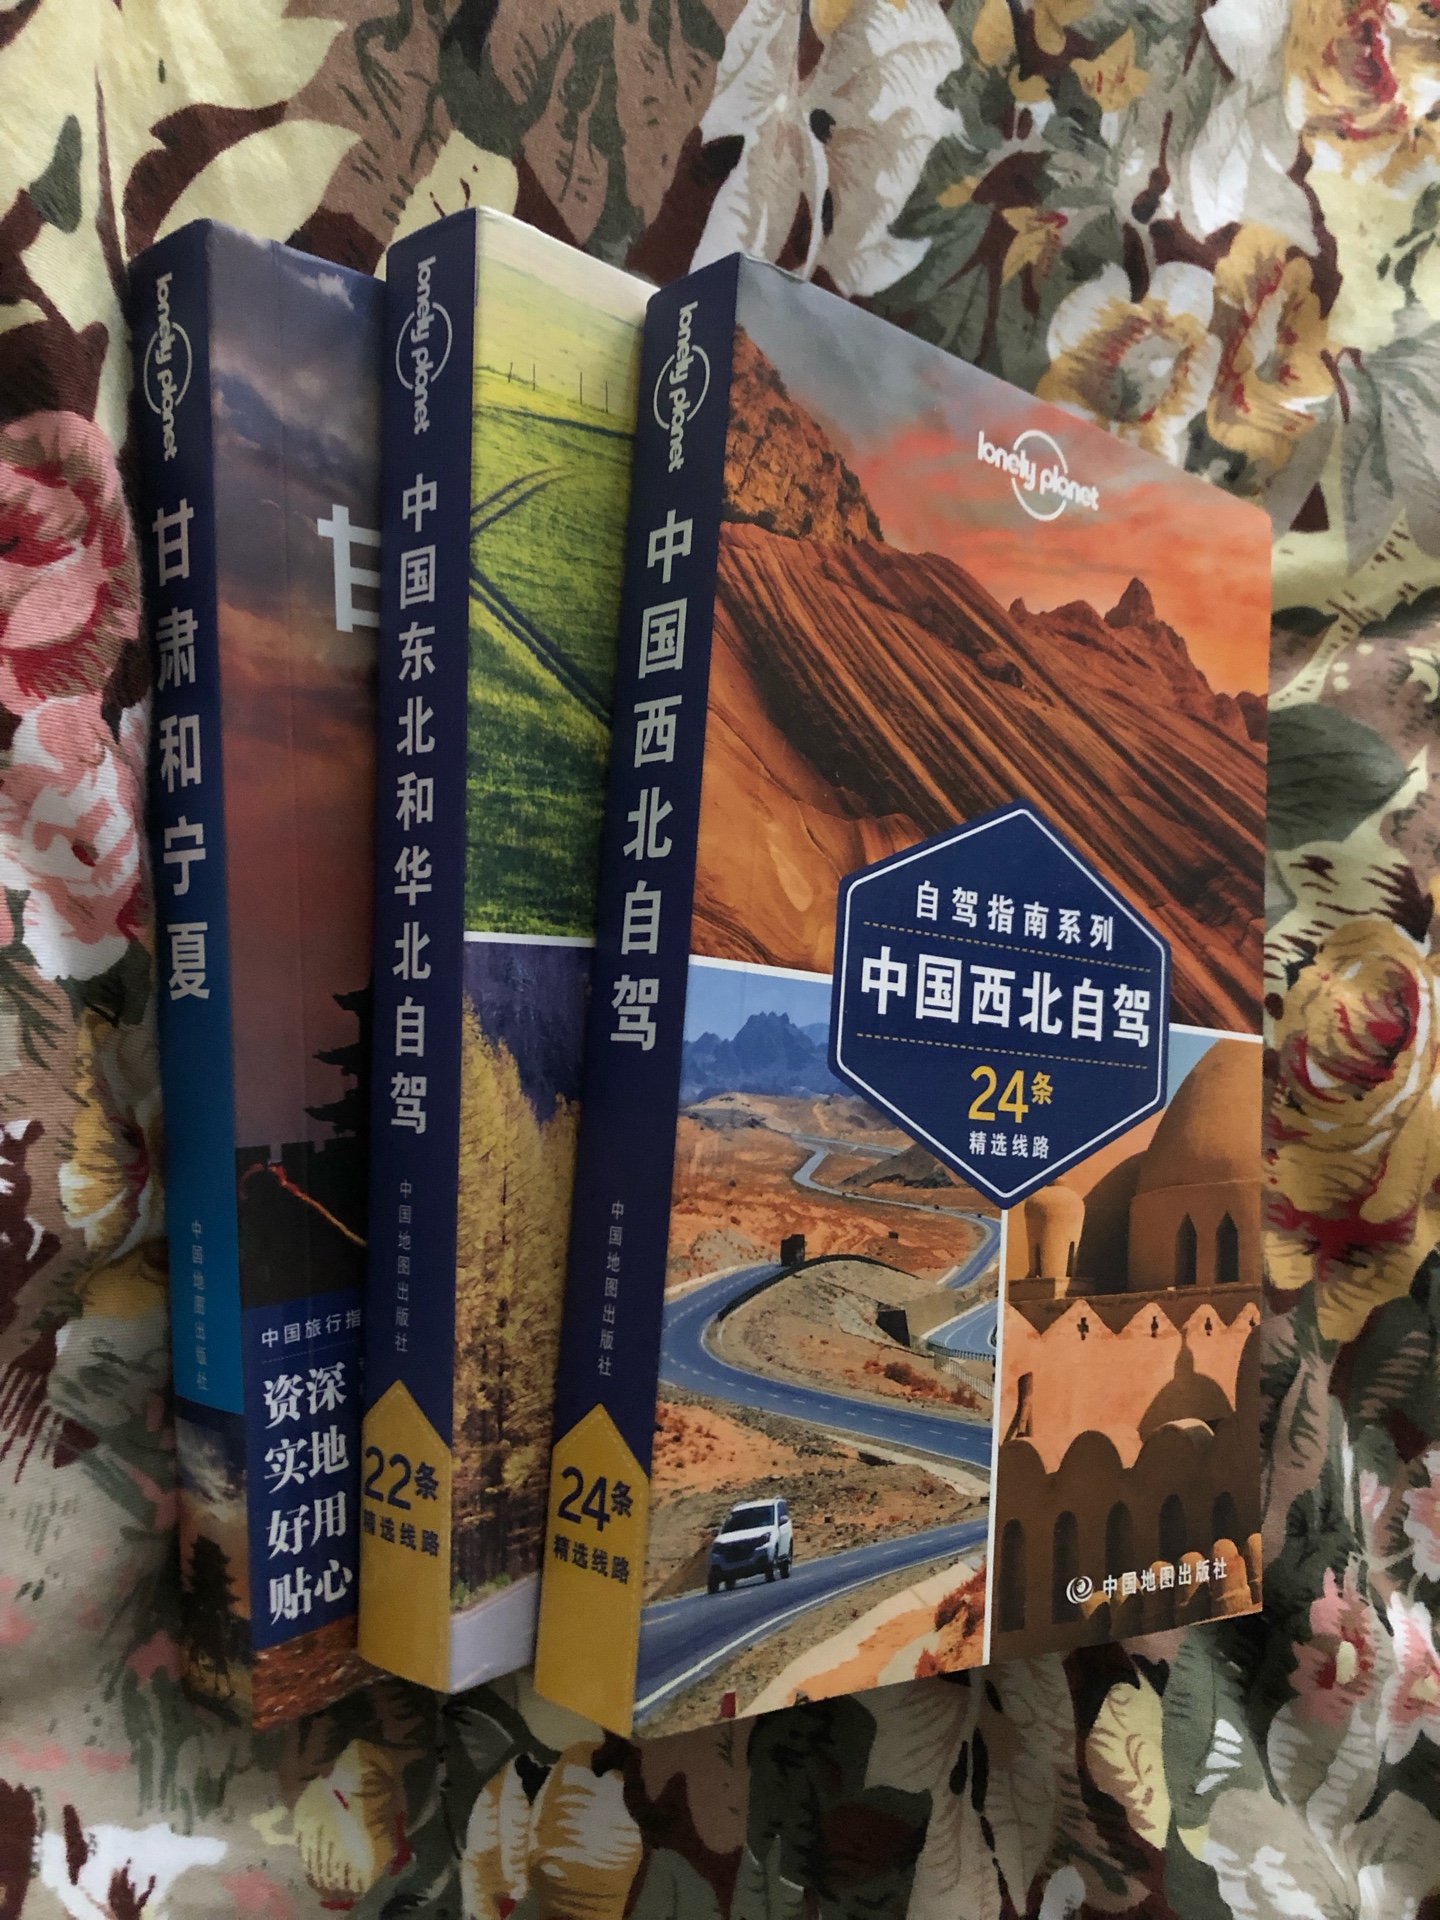 LP系列书籍，是我的最爱，之前买了英文版，现在开始持续补进中文版！只买正版，等待图书的各种优惠活动